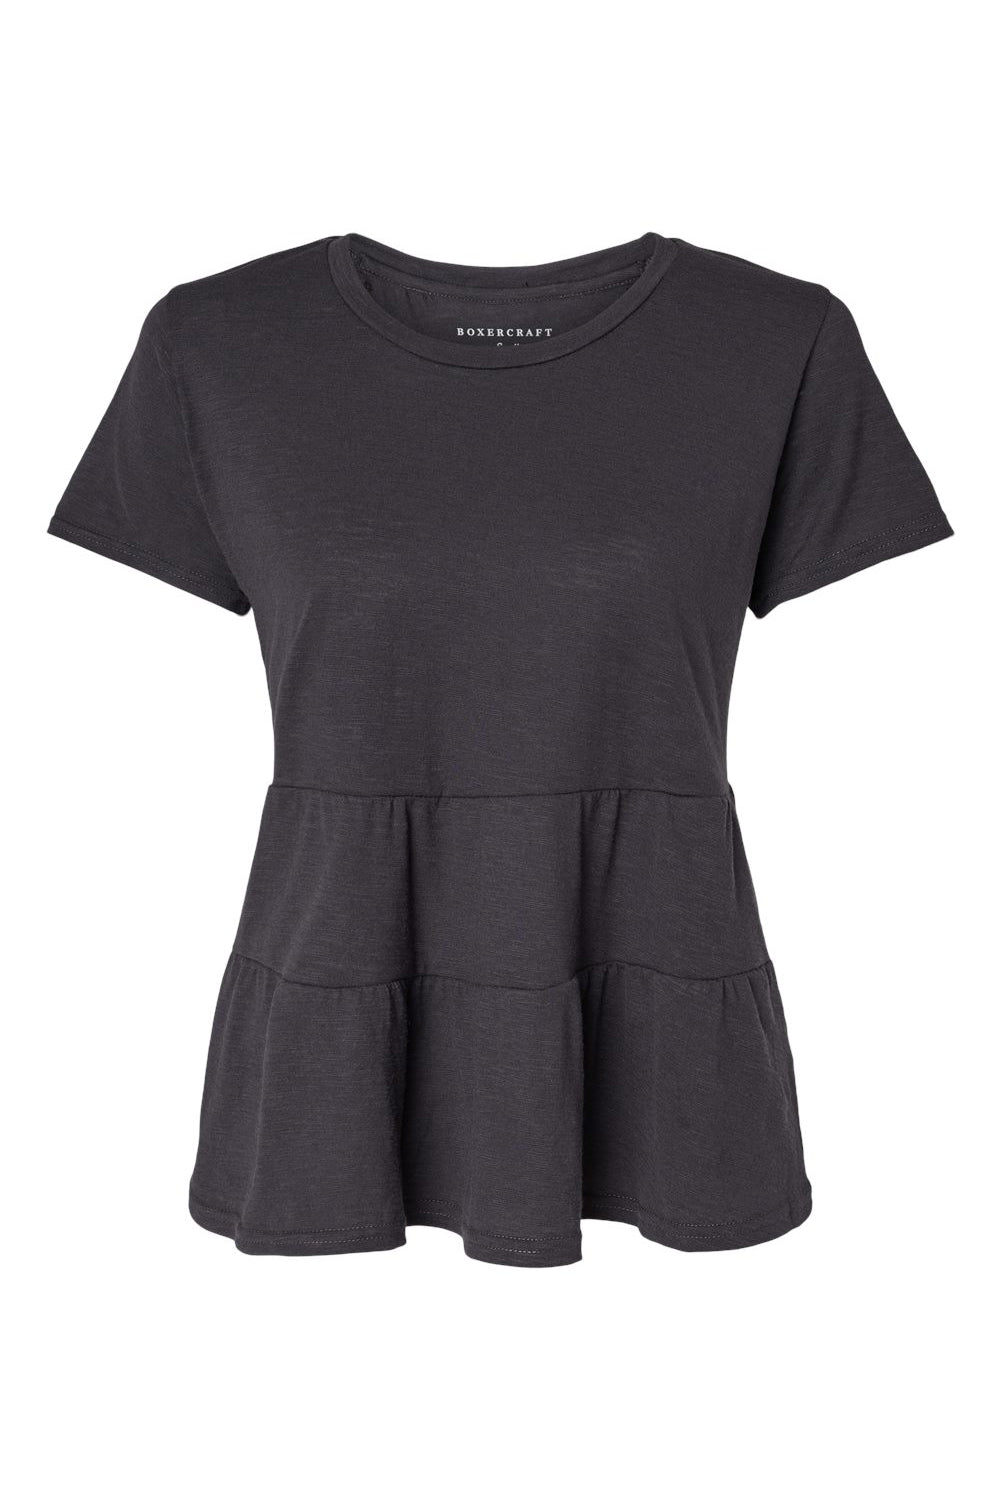 Boxercraft BW2401 Womens Willow Short Sleeve Crewneck T-Shirt Black Flat Front